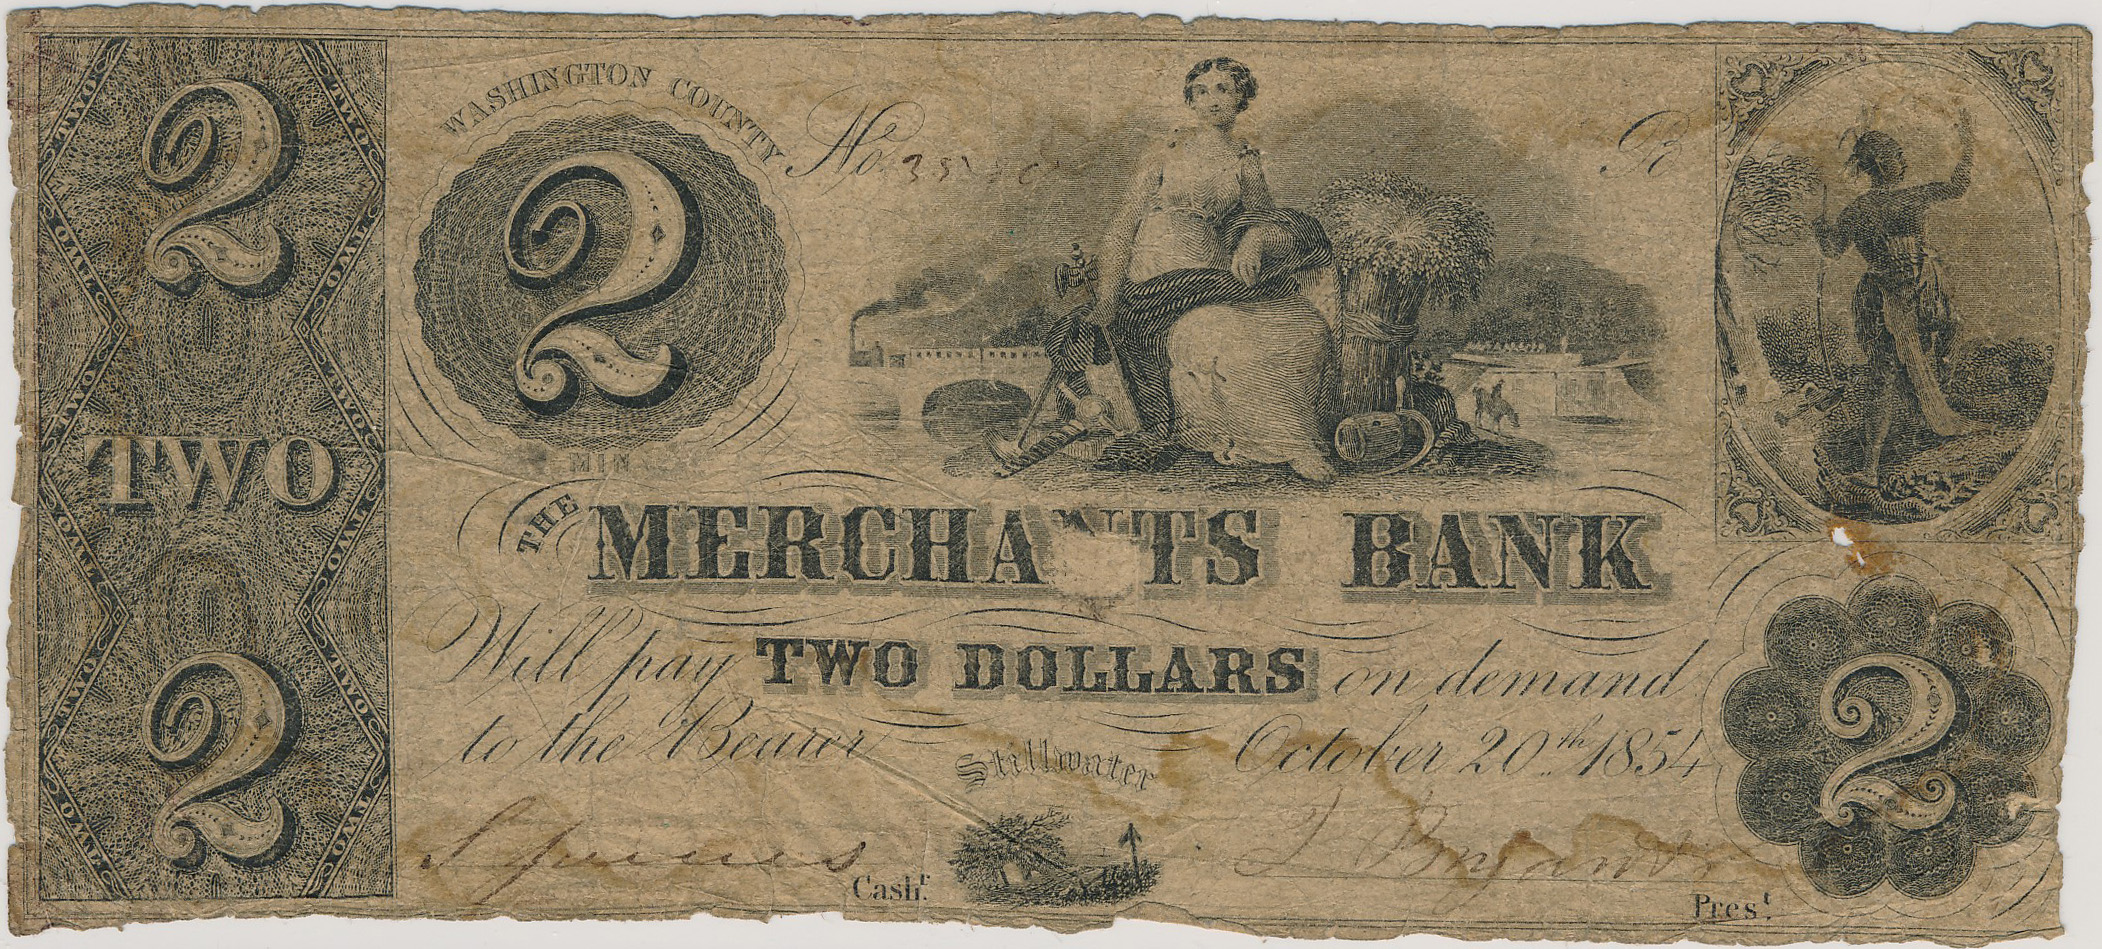 $2 Merchants Bank